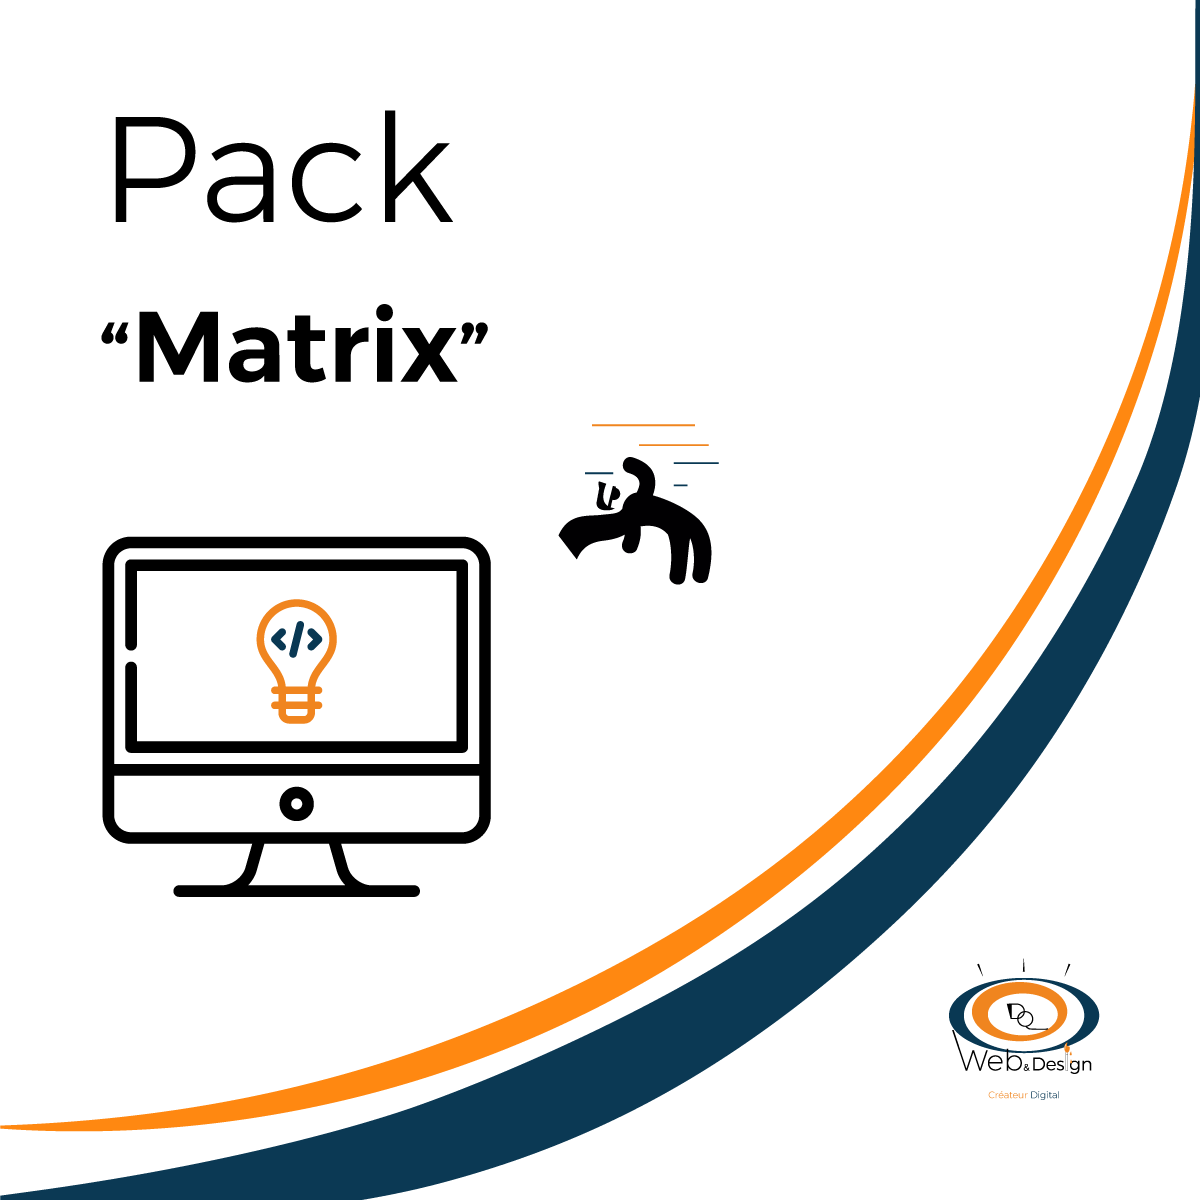 Pack “Matrix” DQ Web & Design